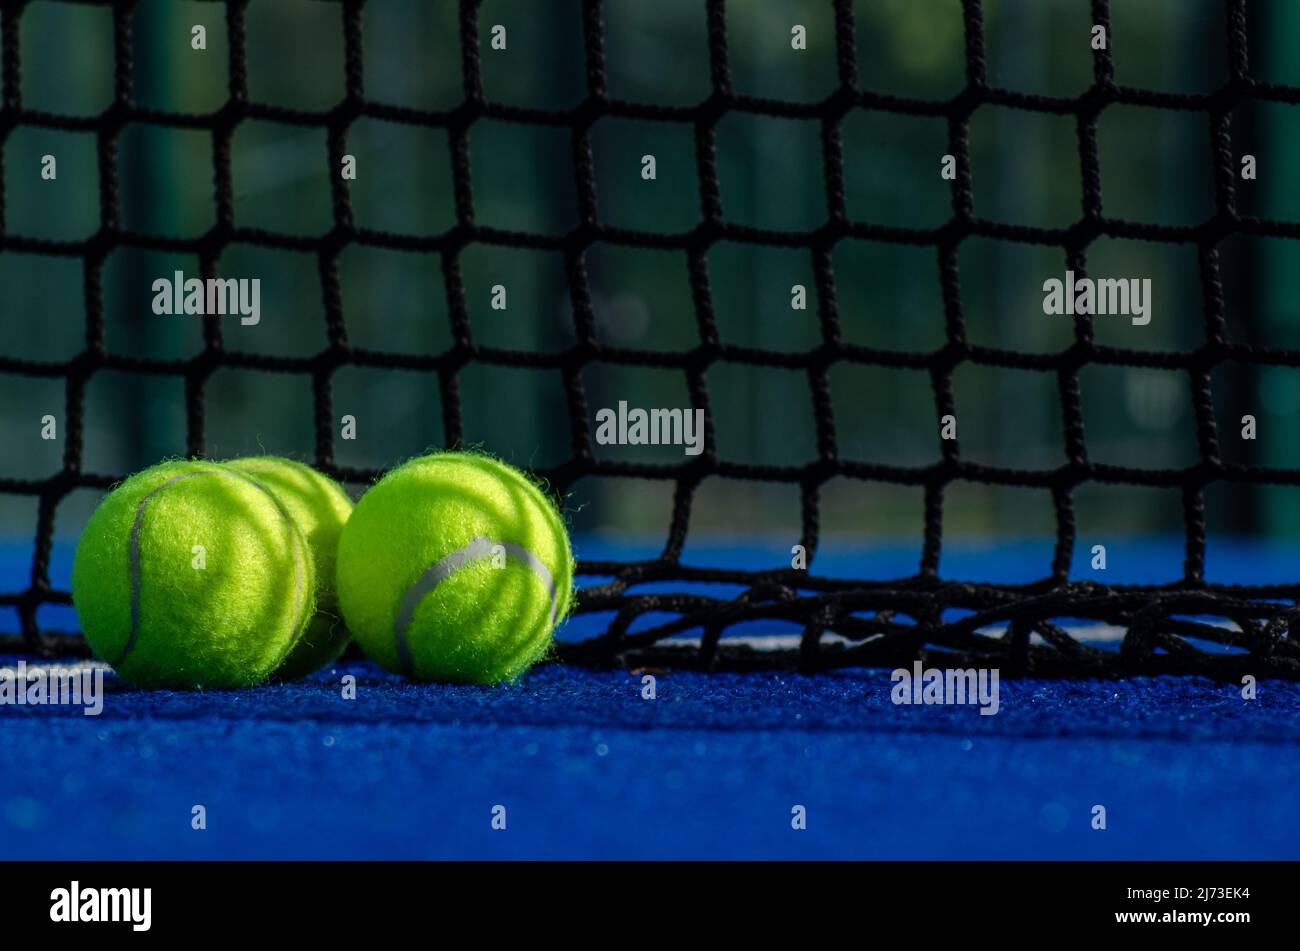 pista de tenis blue paddle, tres pelotas cerca de la red Foto de stock